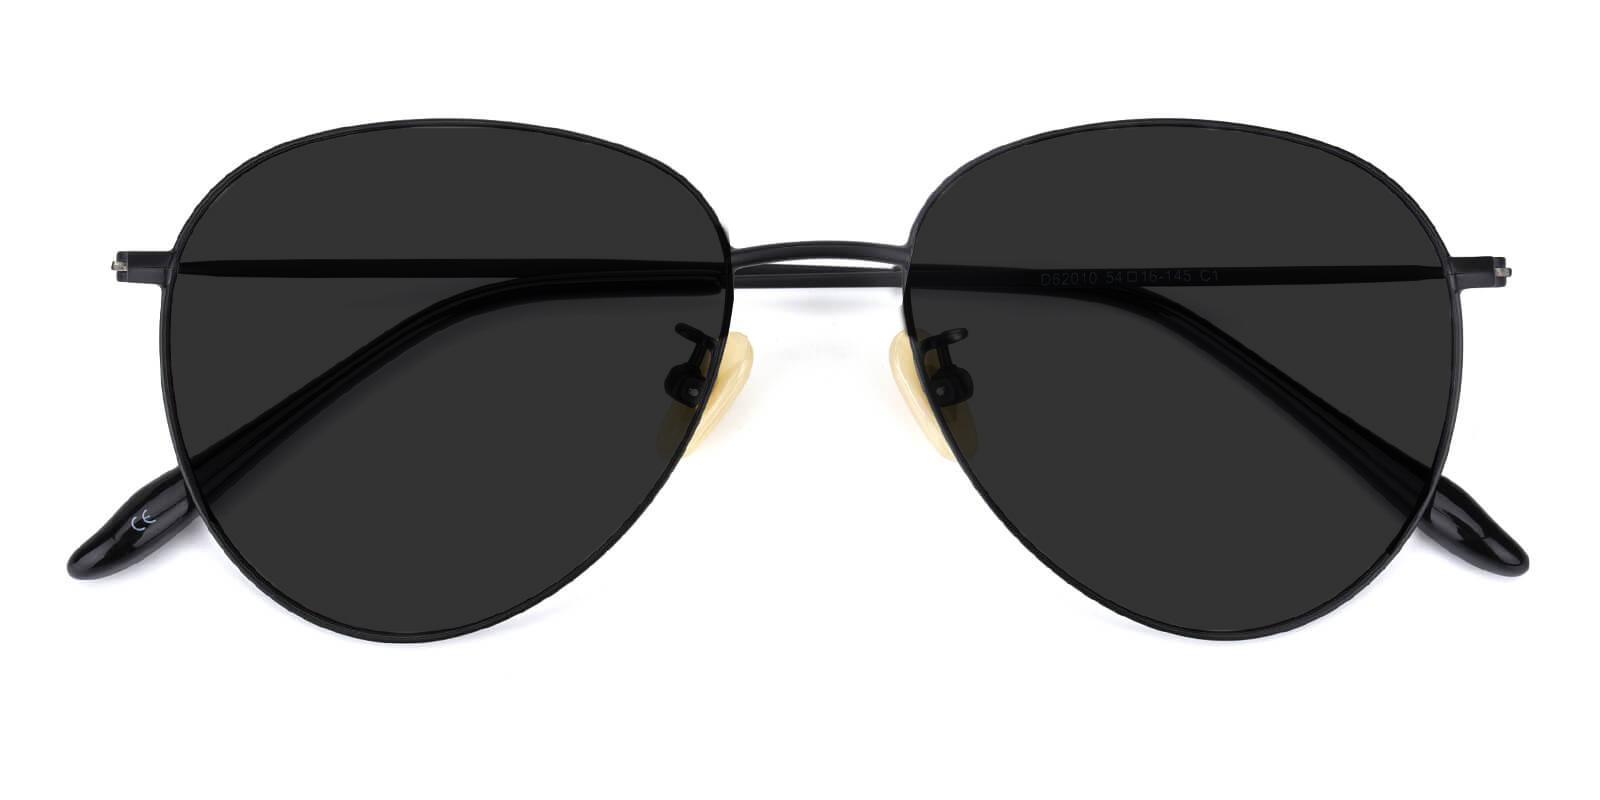 Tower Black Titanium Lightweight , NosePads , Sunglasses Frames from ABBE Glasses